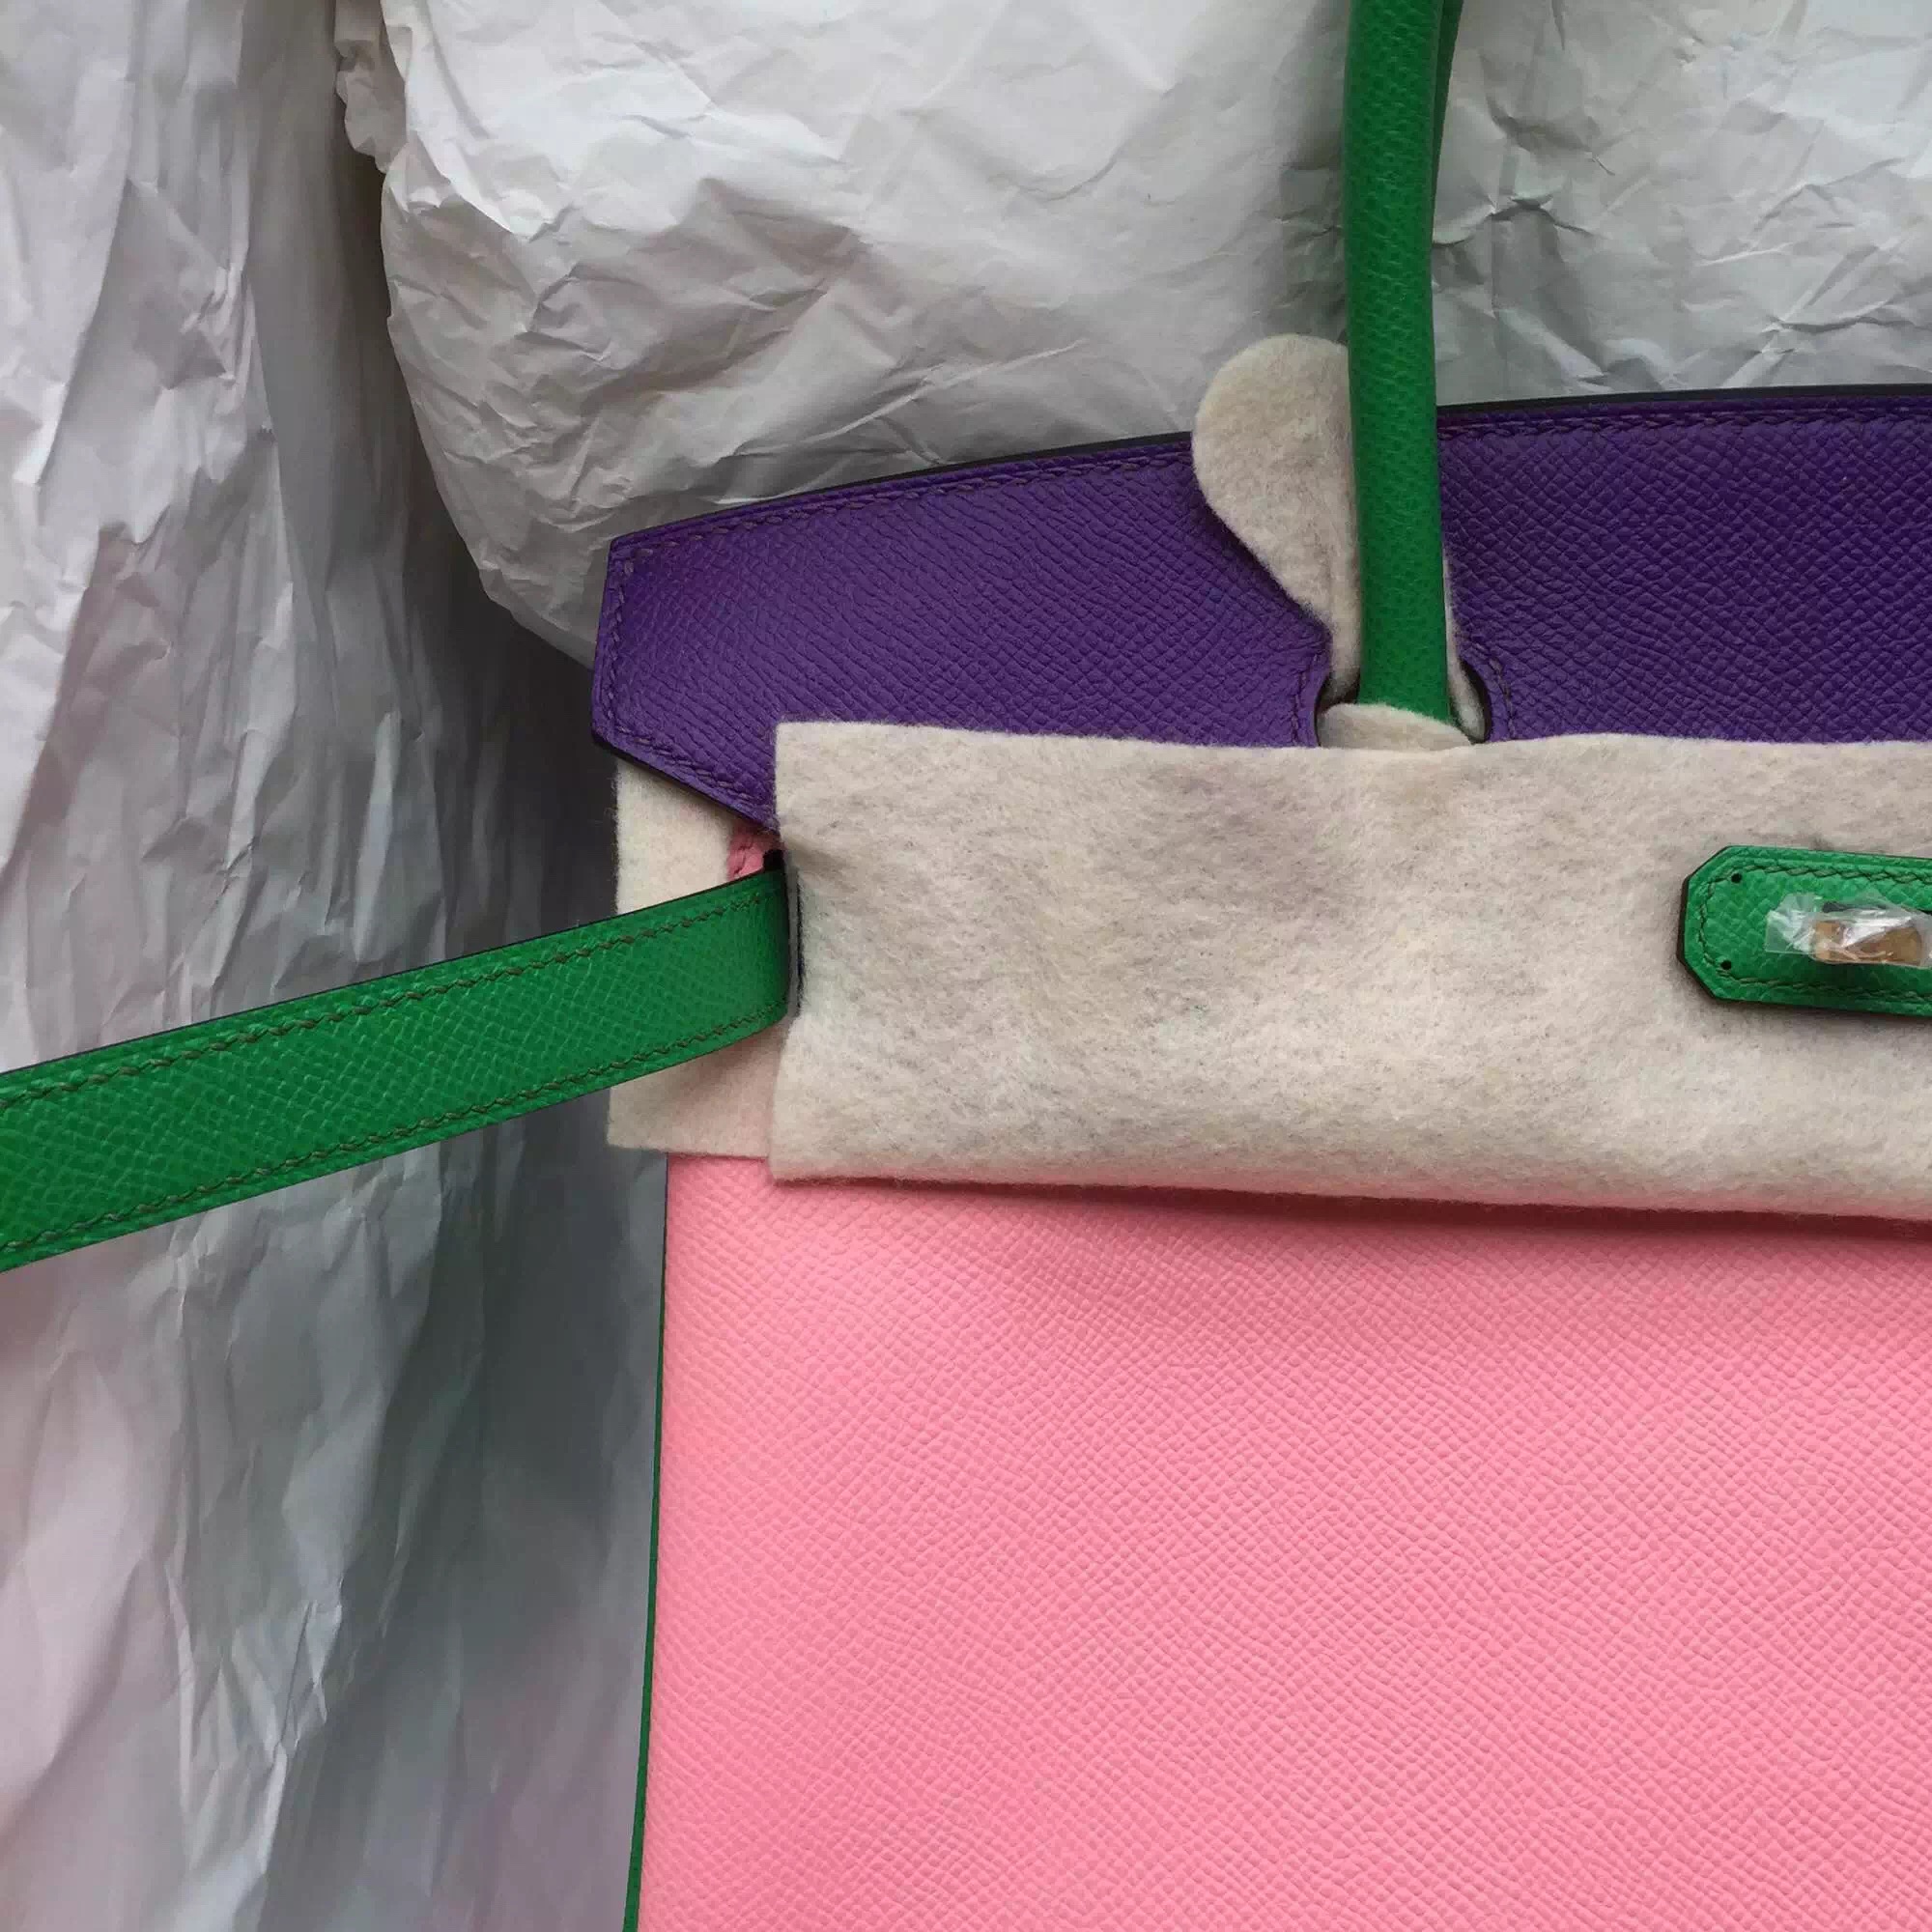 Wholesale Hermes Birkin Bag 30CM 1Q Rose Confetti/1K Bamboo Green/9W Ultraviolet Epsom Leather